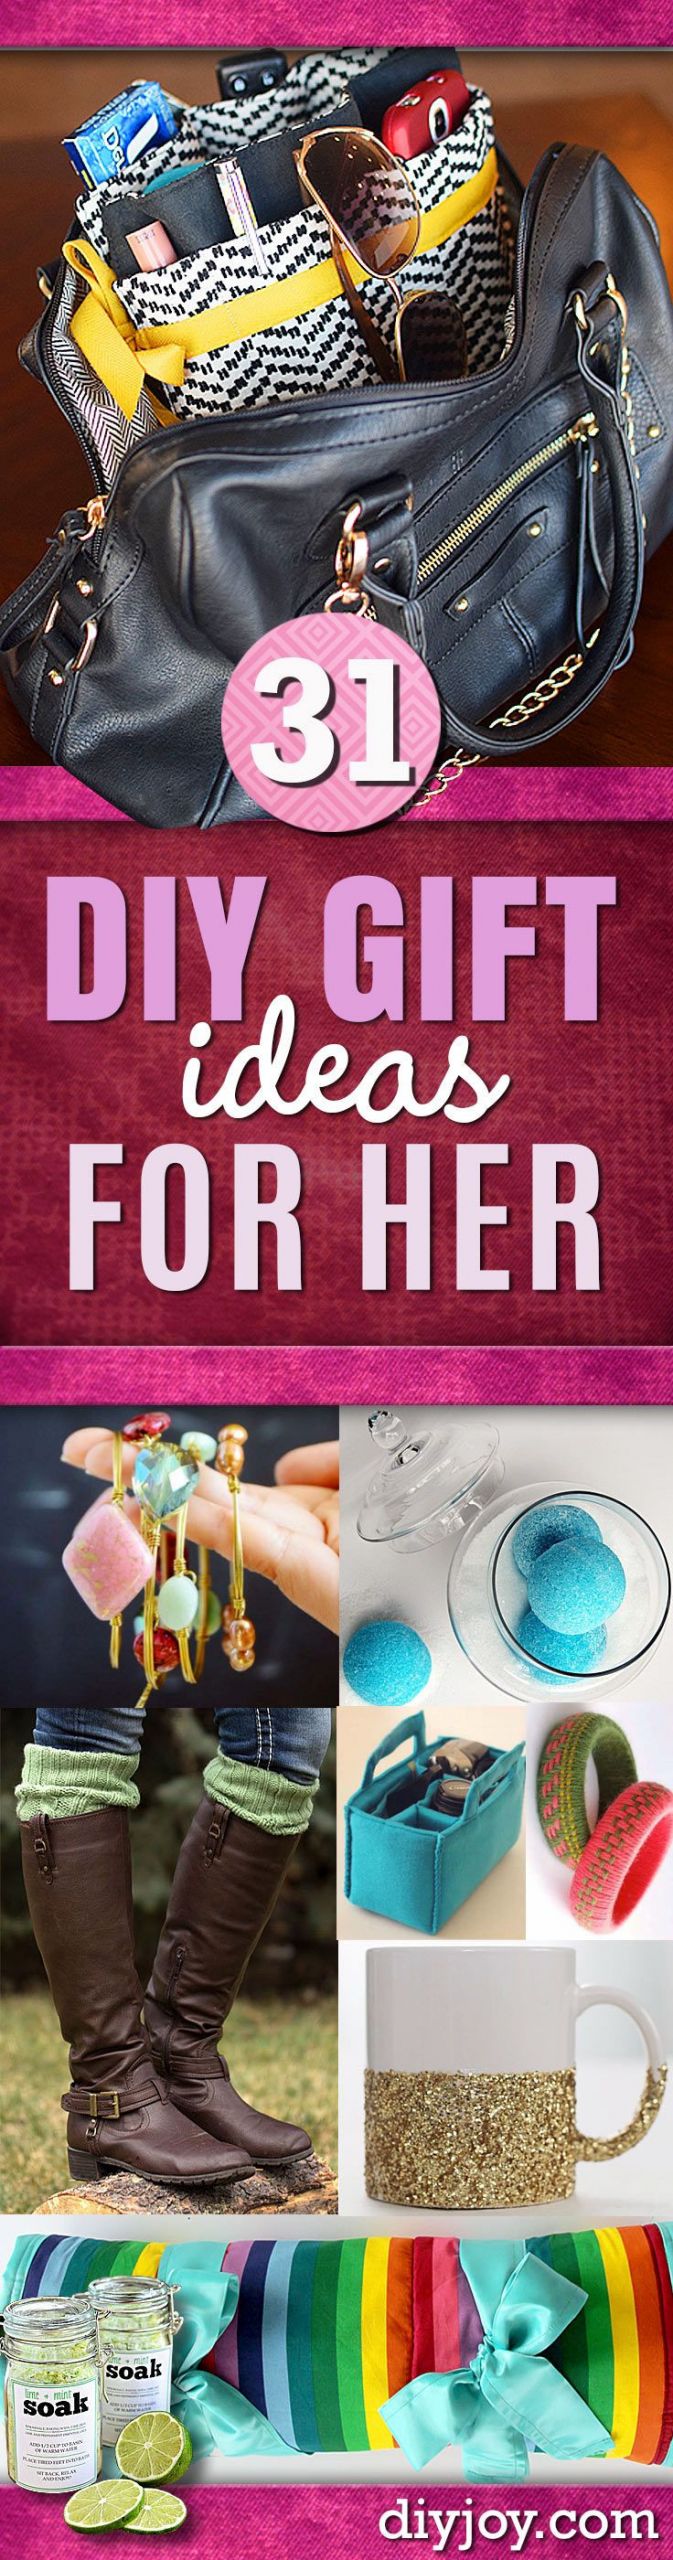 Homemade Anniversary Gift Ideas For Her
 Super Special DIY Gift Ideas for Her DIY JOY